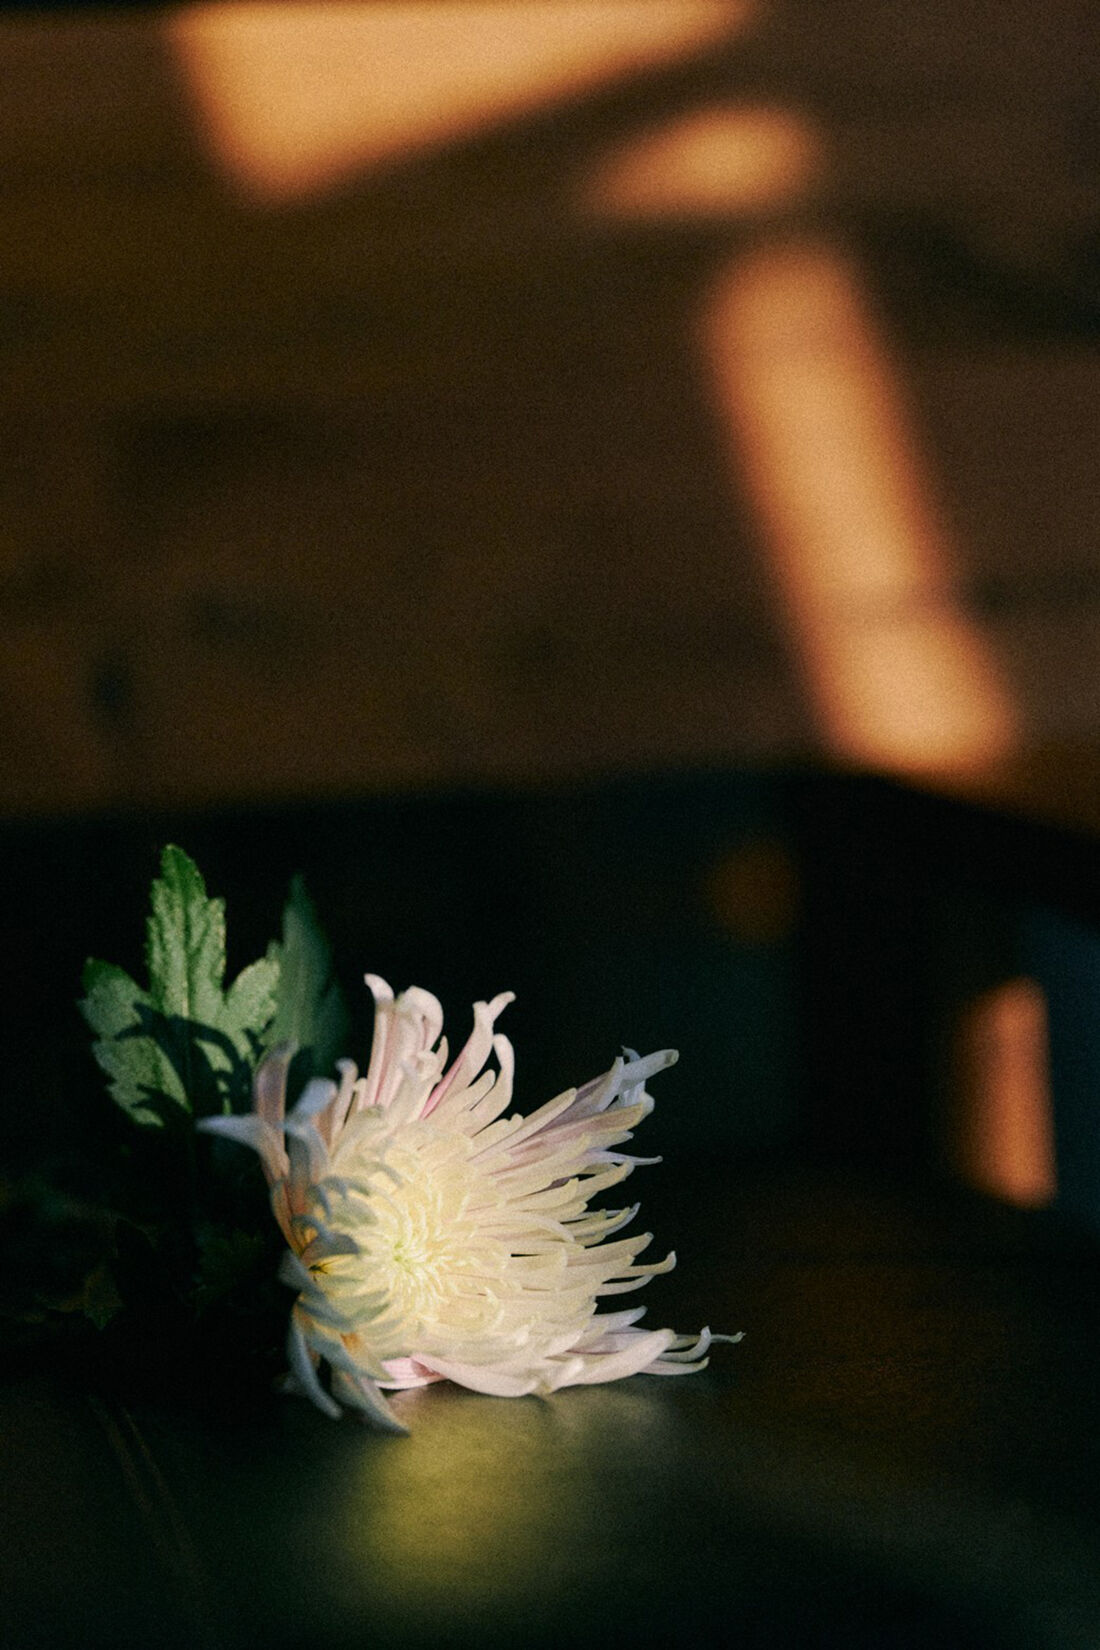 haco!|ｈａｃｏ！×ＮＯＫＩ 花をまとうコラボシリーズ【糸菊】お花の模様に編み立てたふわほわジャカードカーディガン